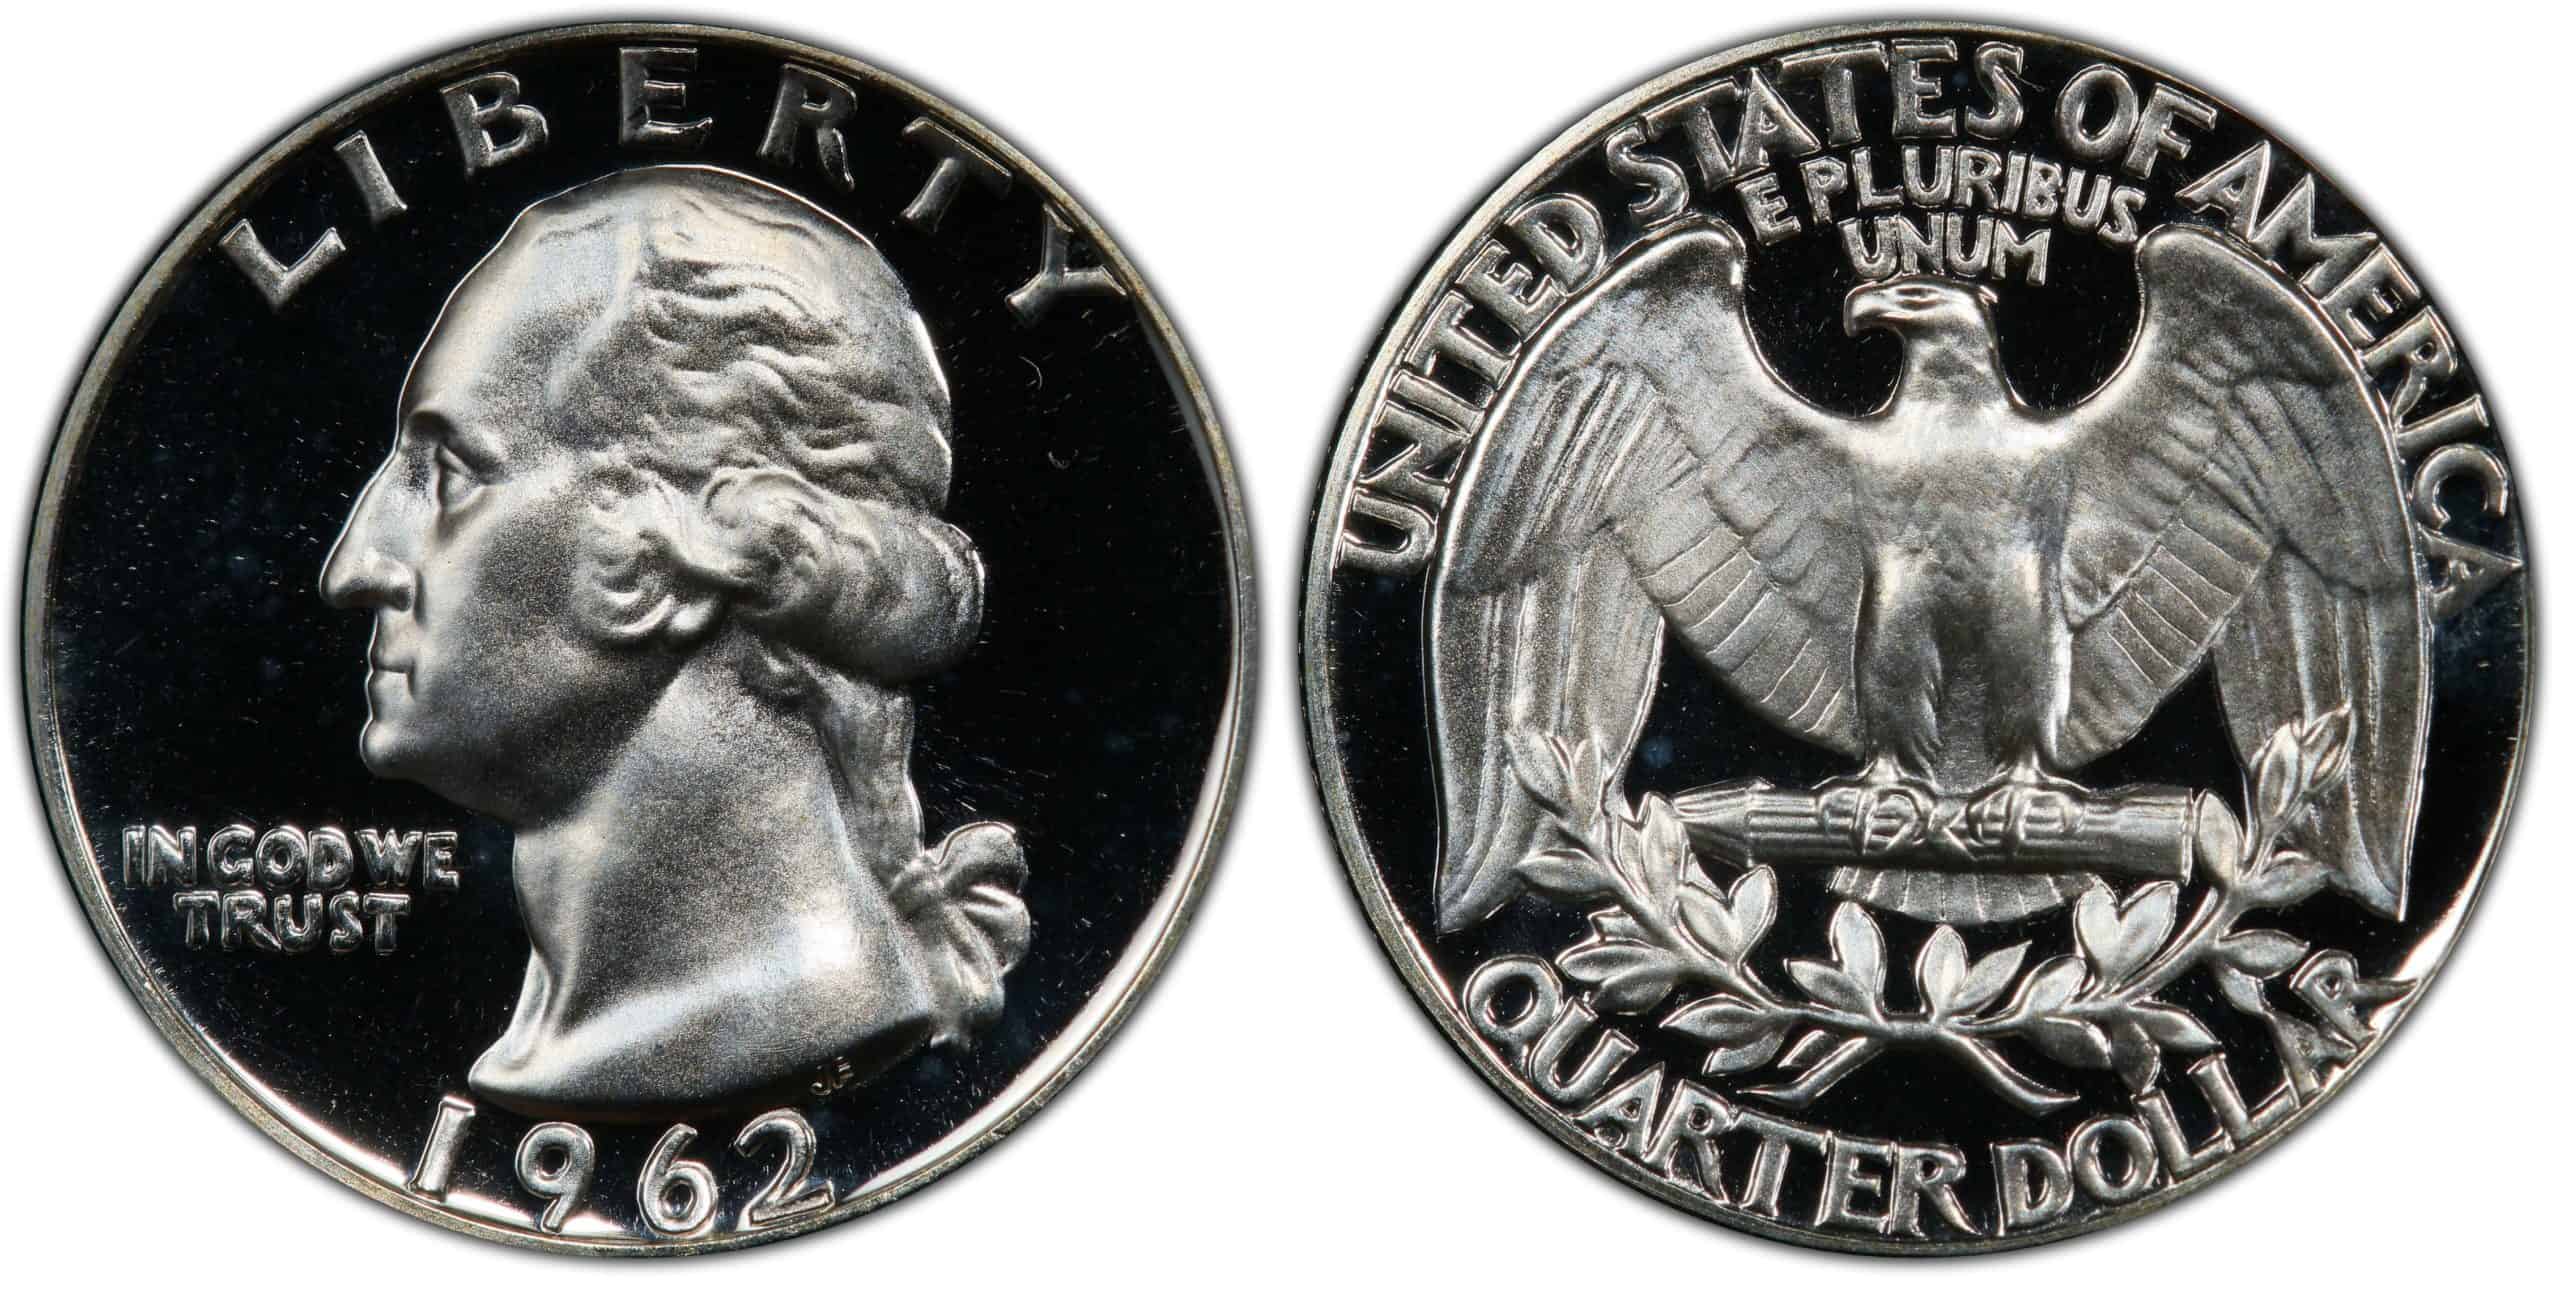 1962 proof Washington silver quarter